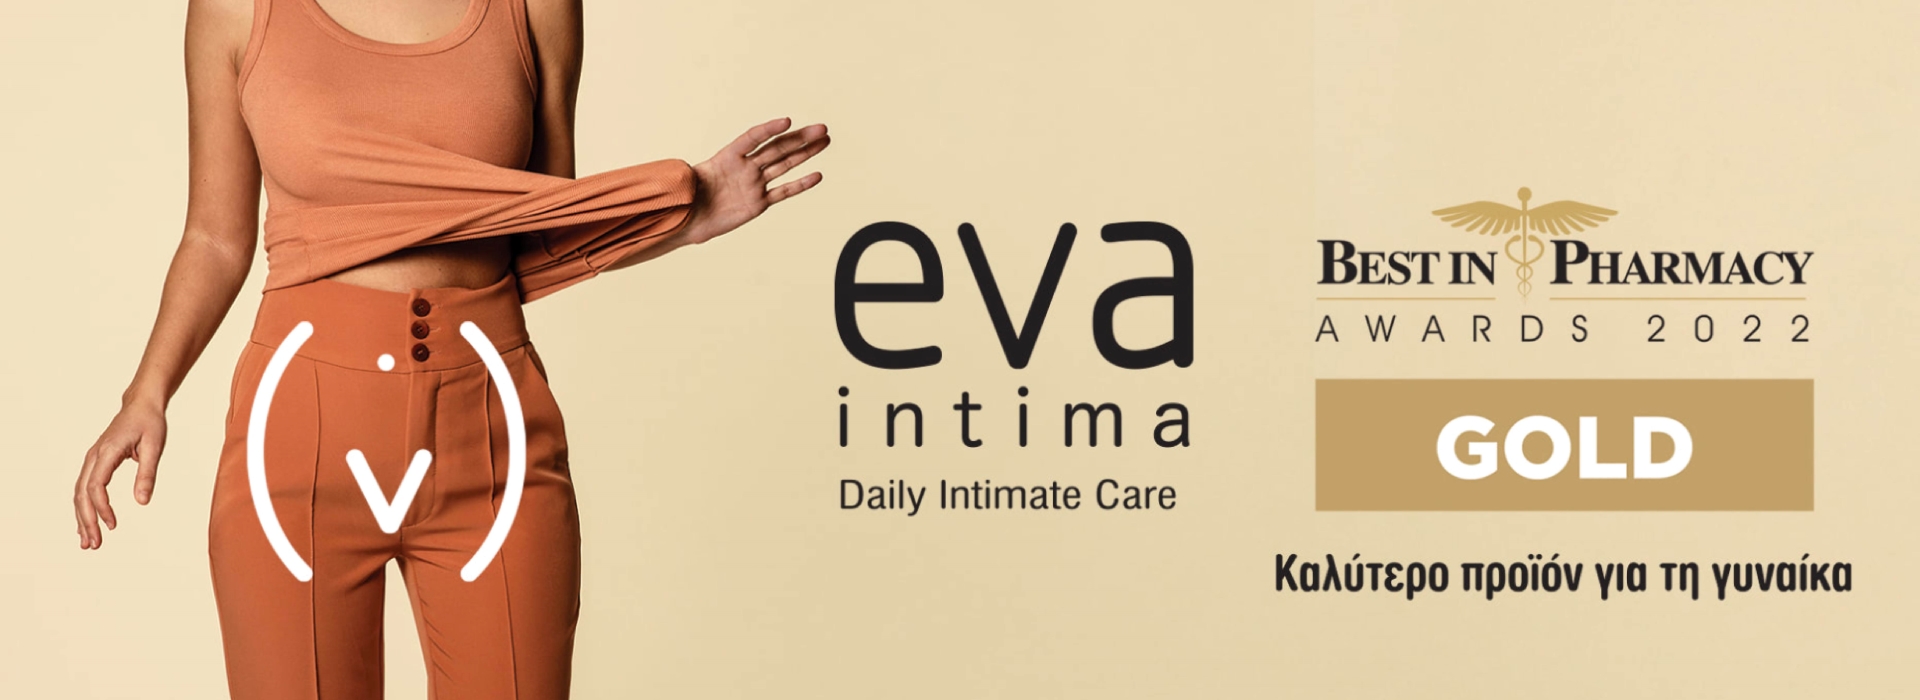 Intermed Eva Intima